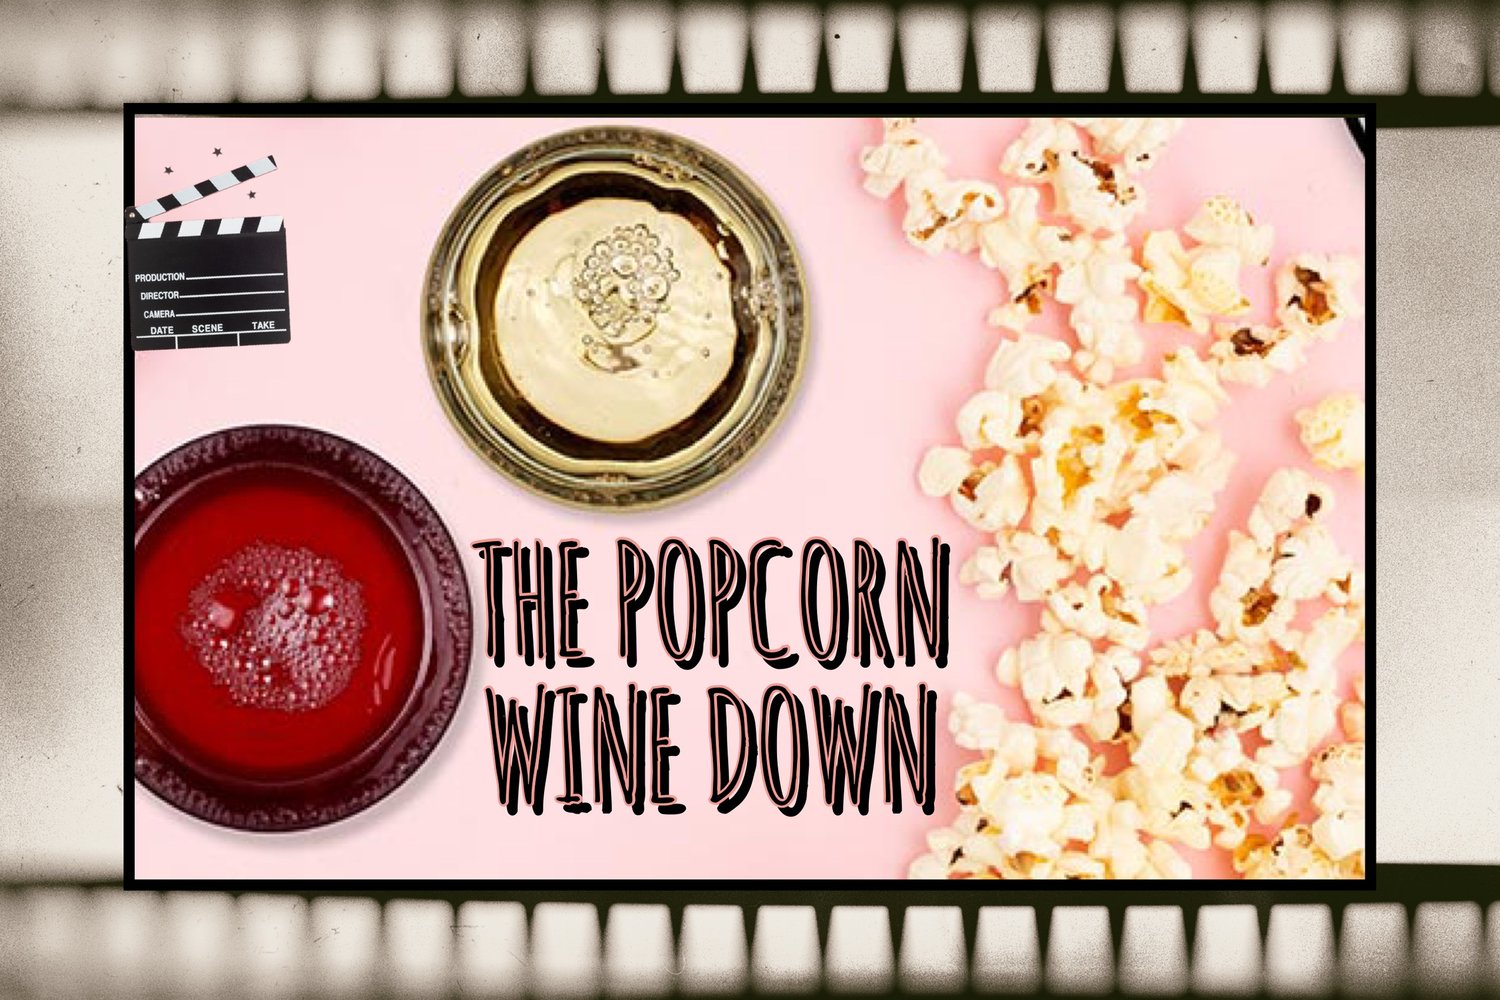 The Popcorn Wine Down